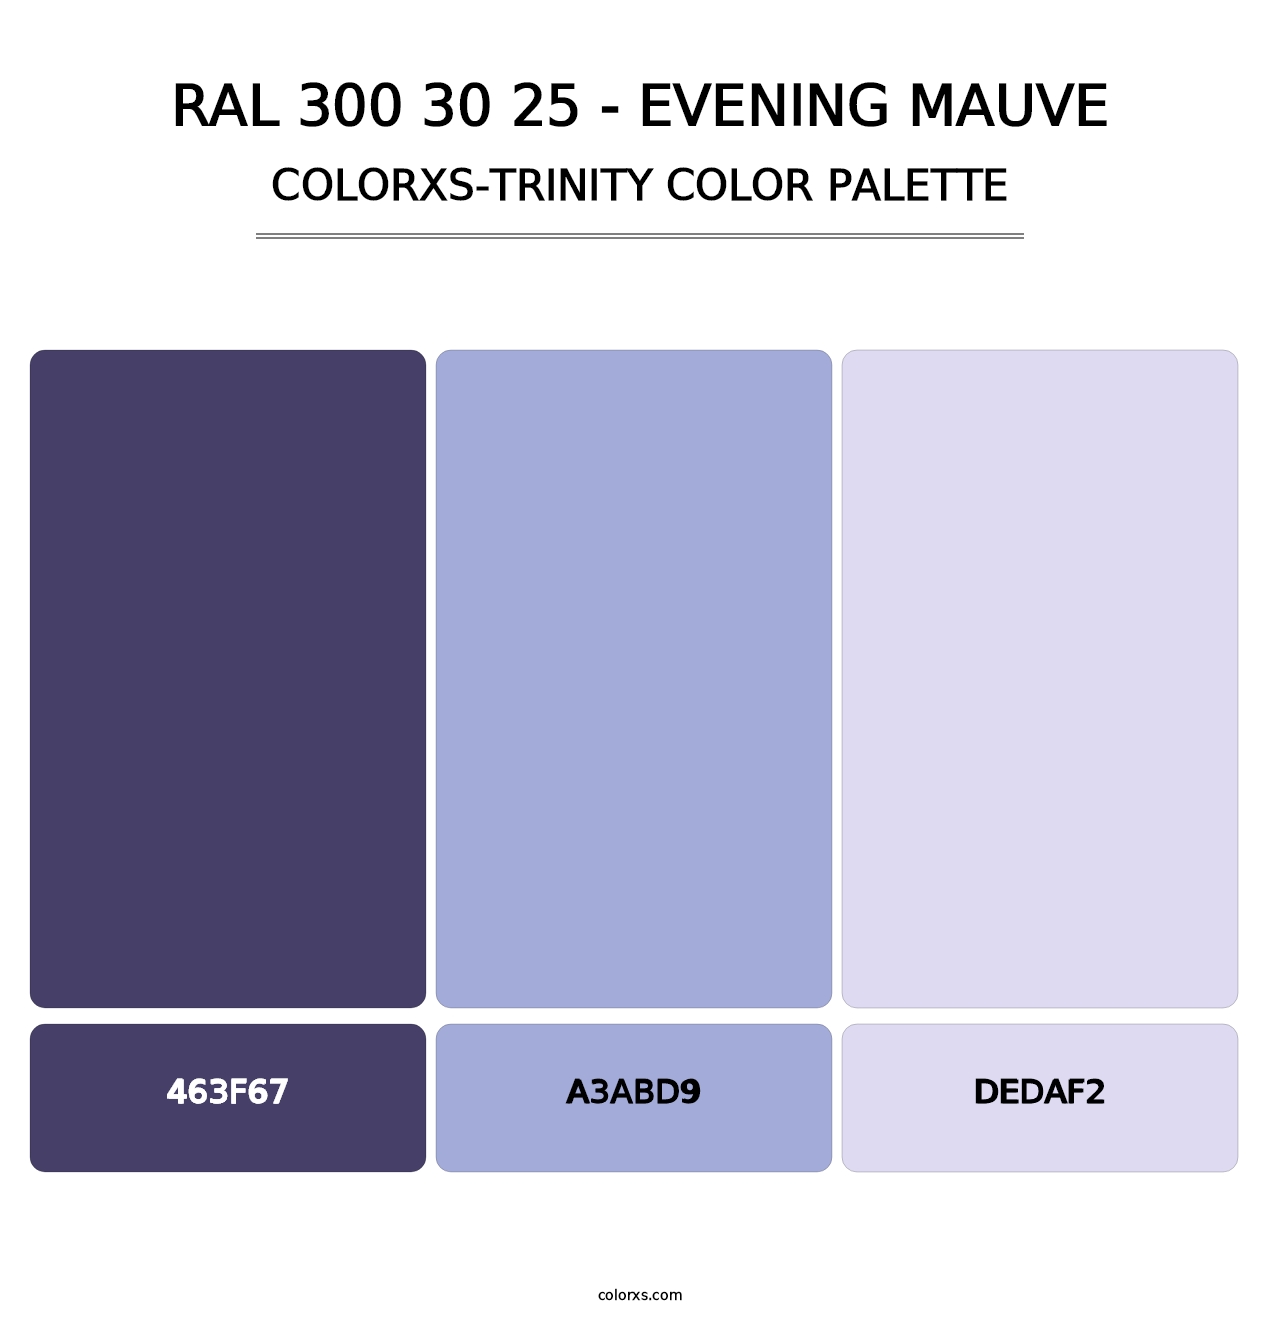 RAL 300 30 25 - Evening Mauve - Colorxs Trinity Palette